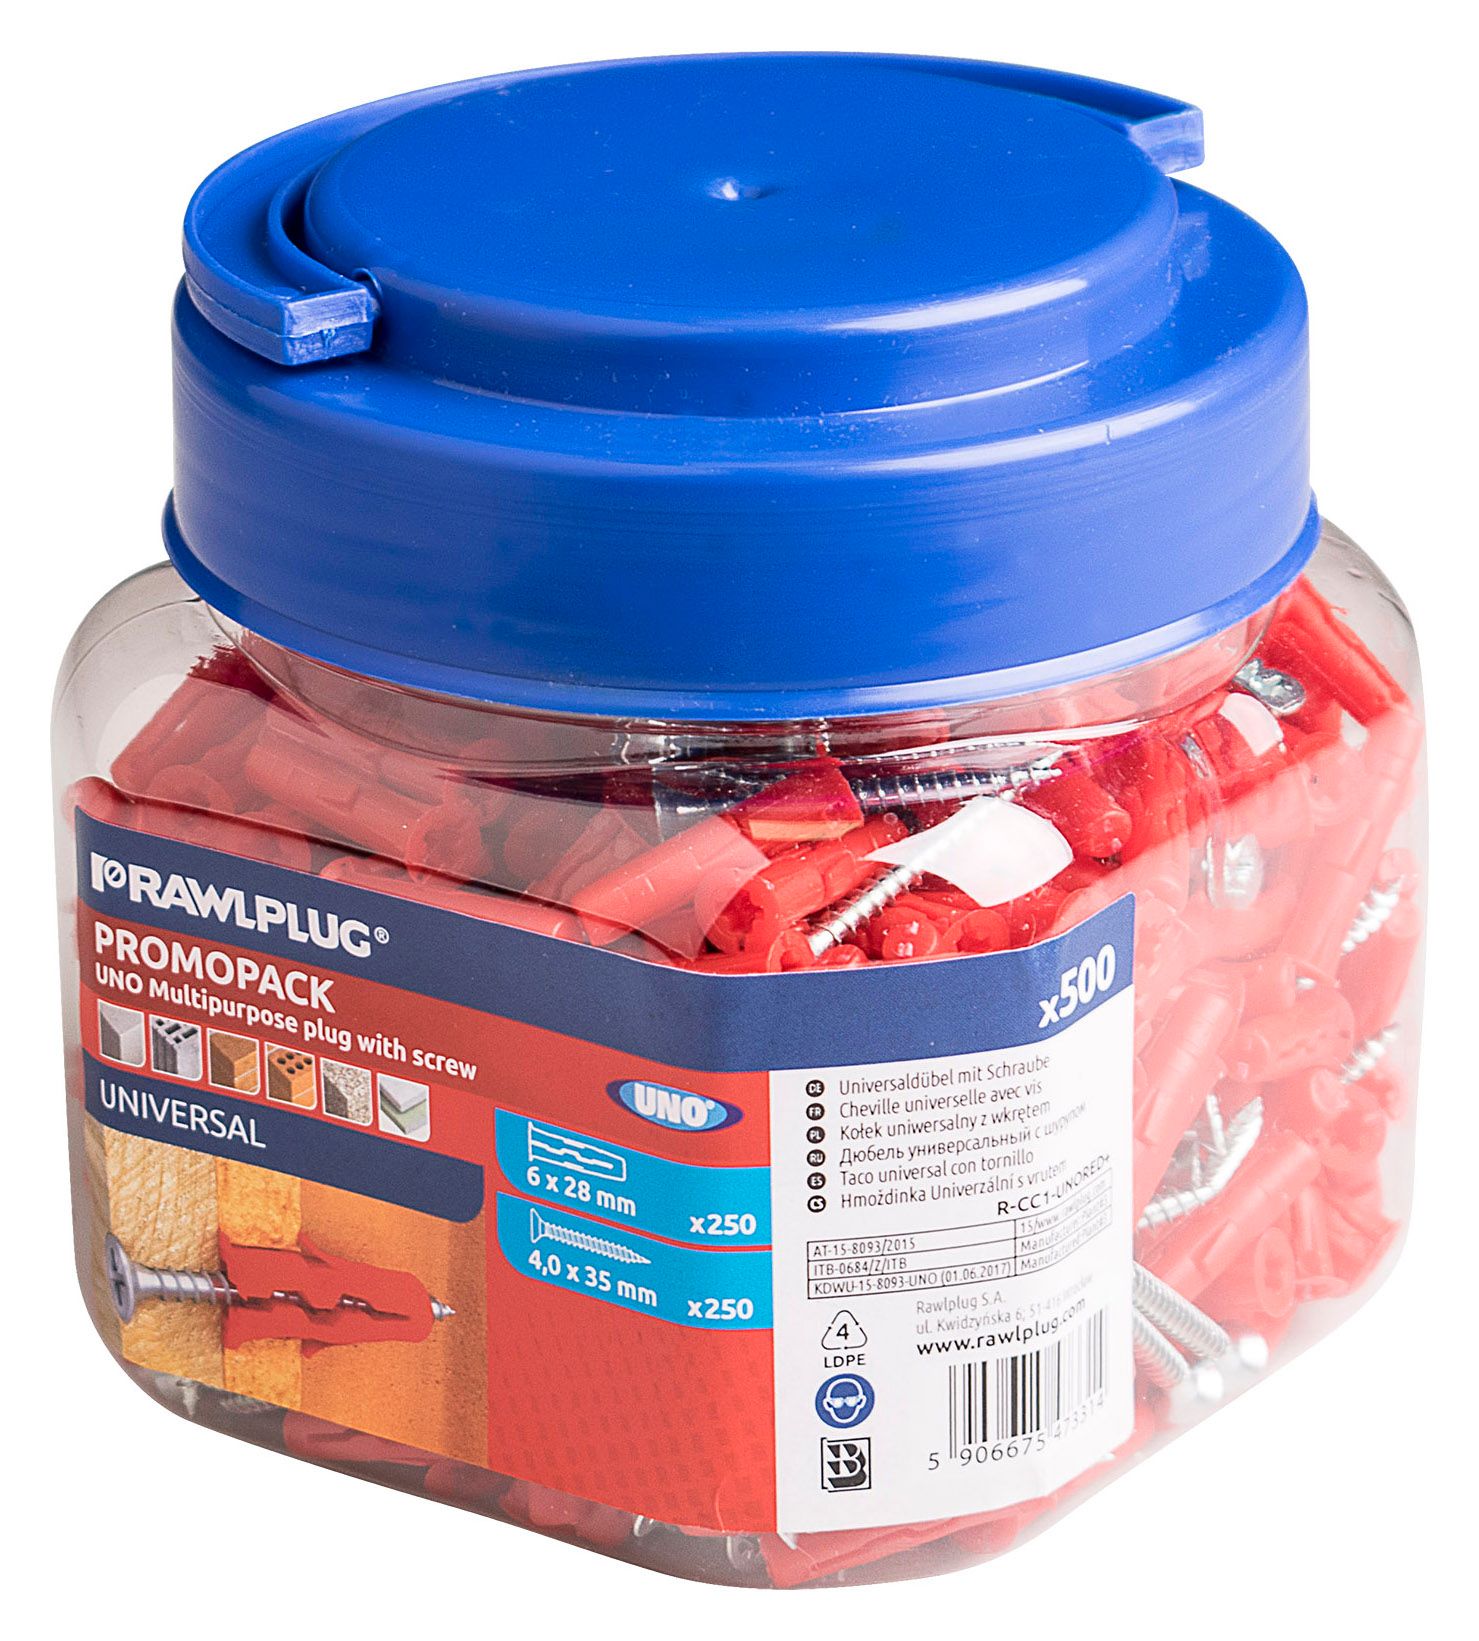 Rawlplug Uno Red Wall Plug Jar With Screws - 250 pack